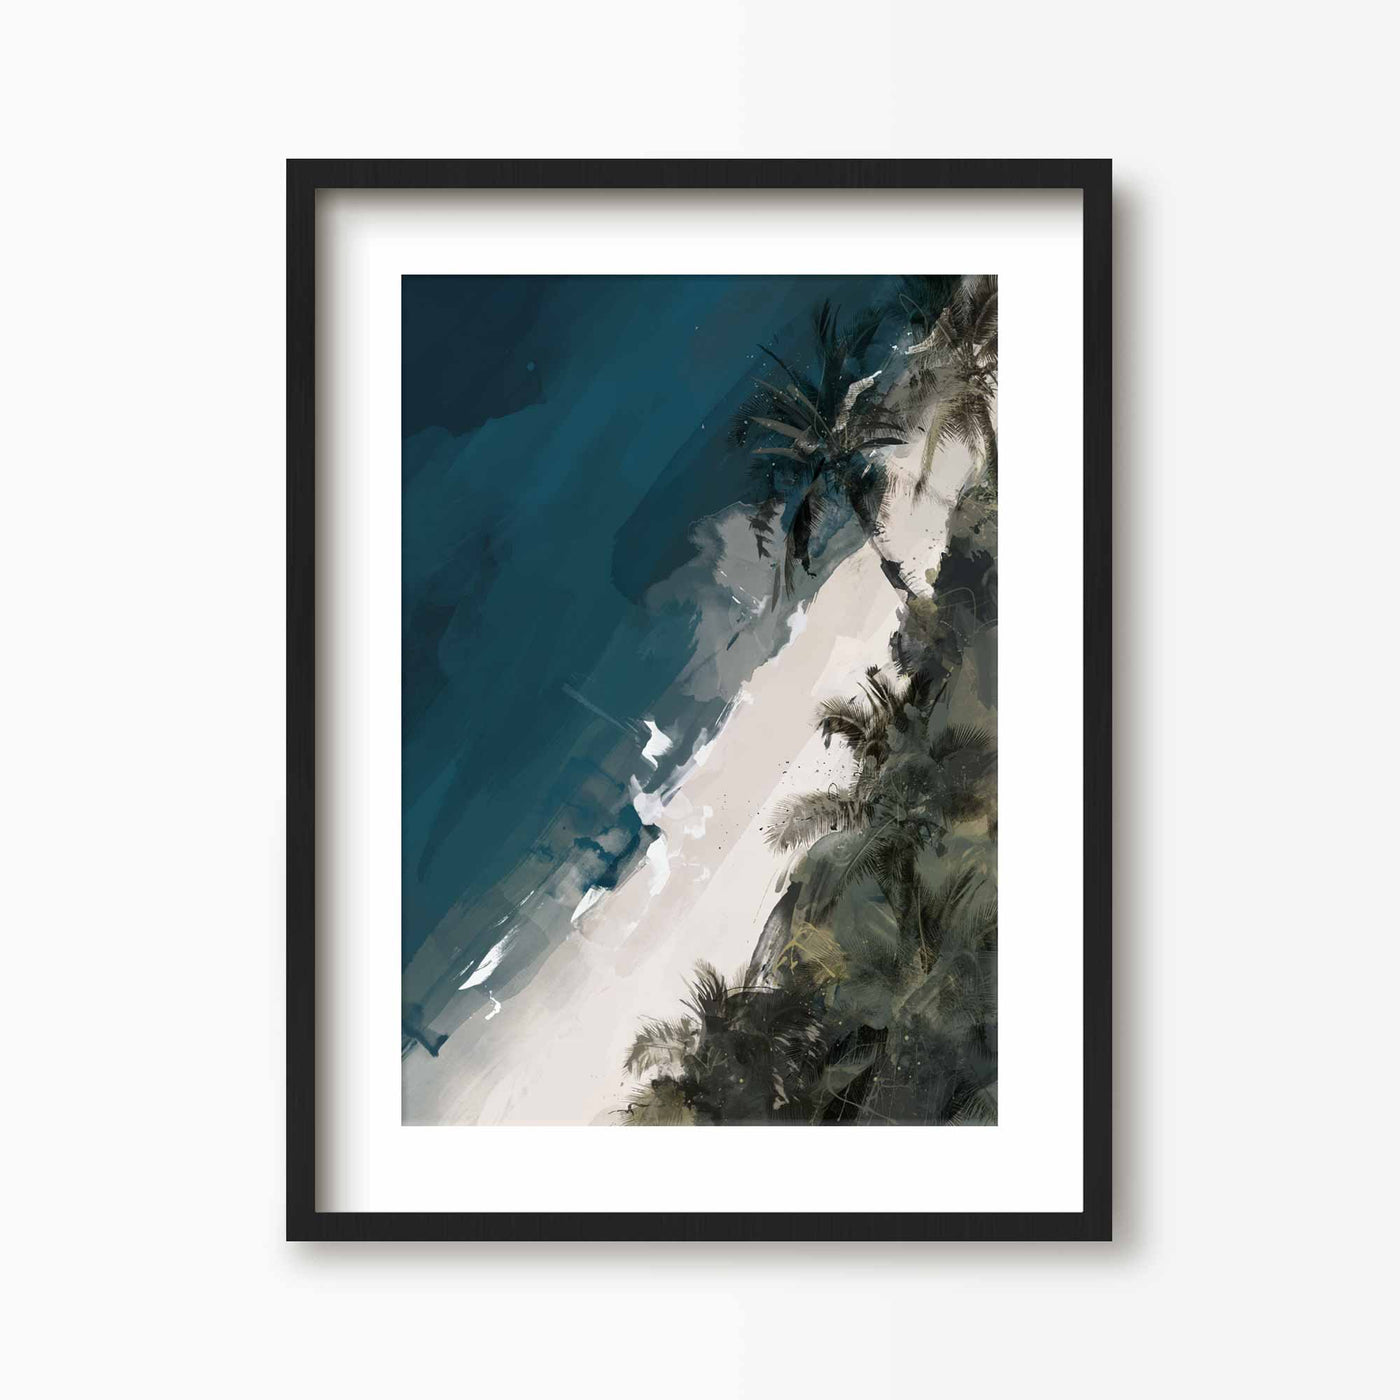 Green Lili 30x40cm (12x16") / Black Frame + Mount Beach Days Art Print